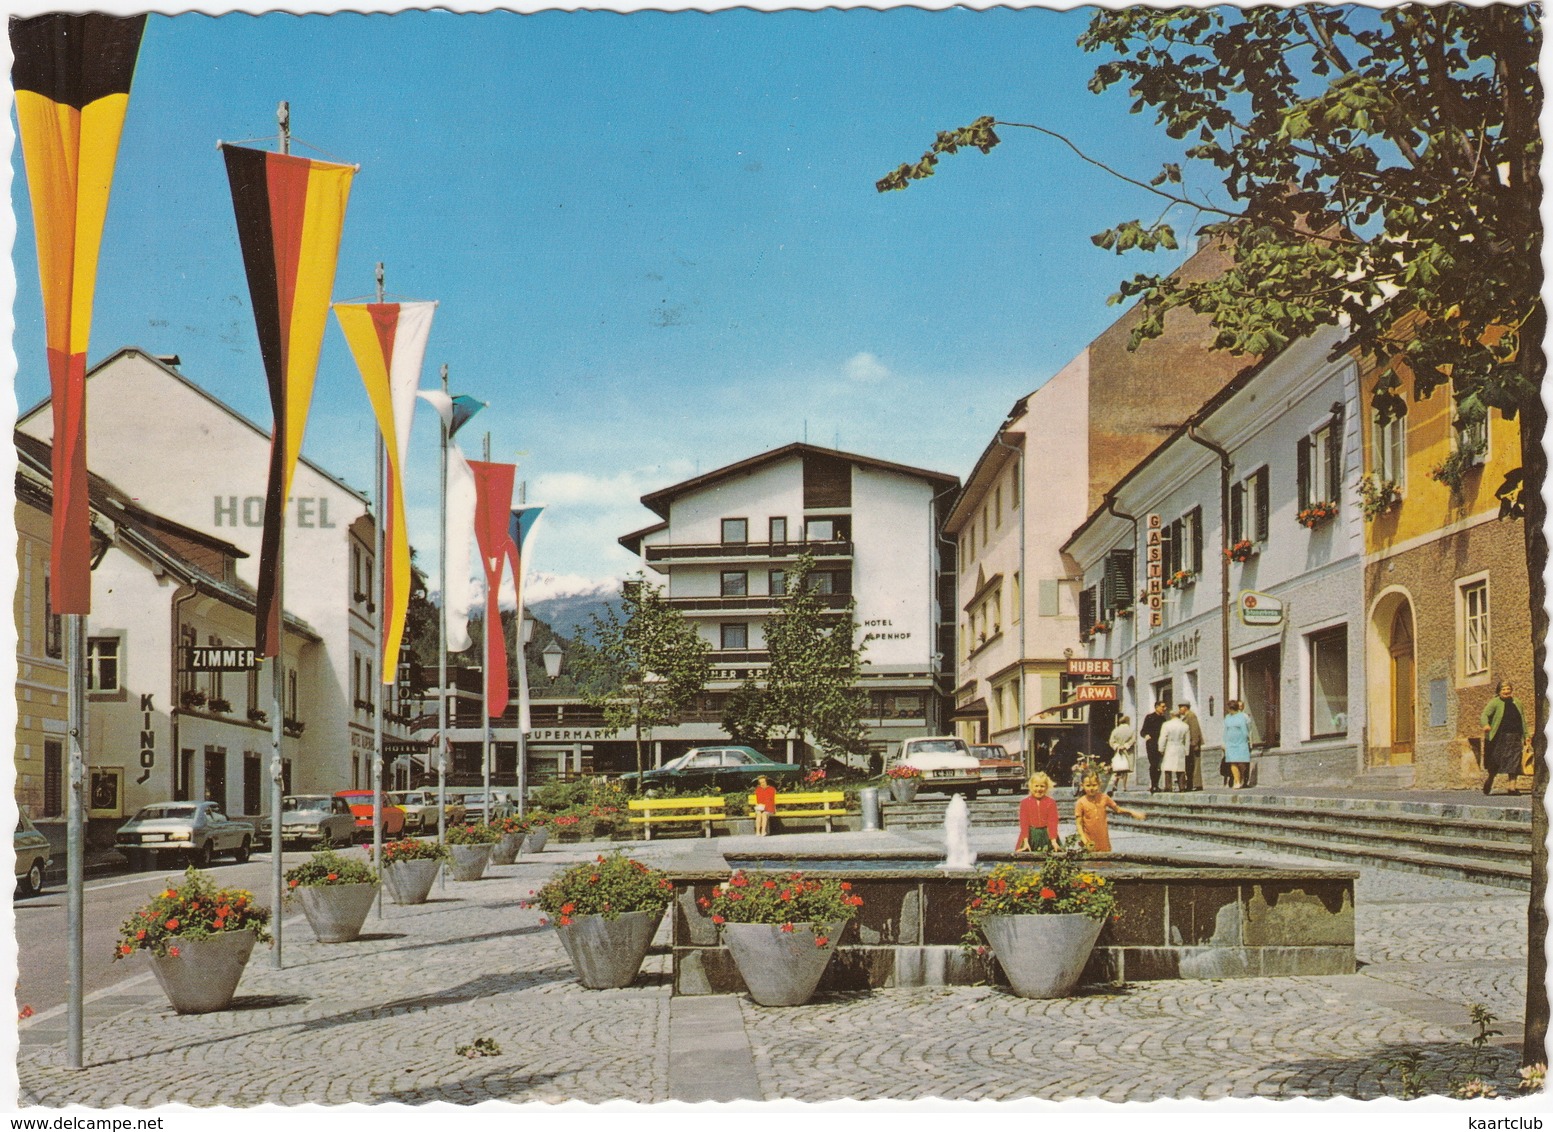 Obervellach: FORD CAPRI & 17M, RENAULT 16, MERCEDES W114, OPEL REKORD-B - Hauptplatz, Hotel, Kino, Gasthof - Kärnten - PKW